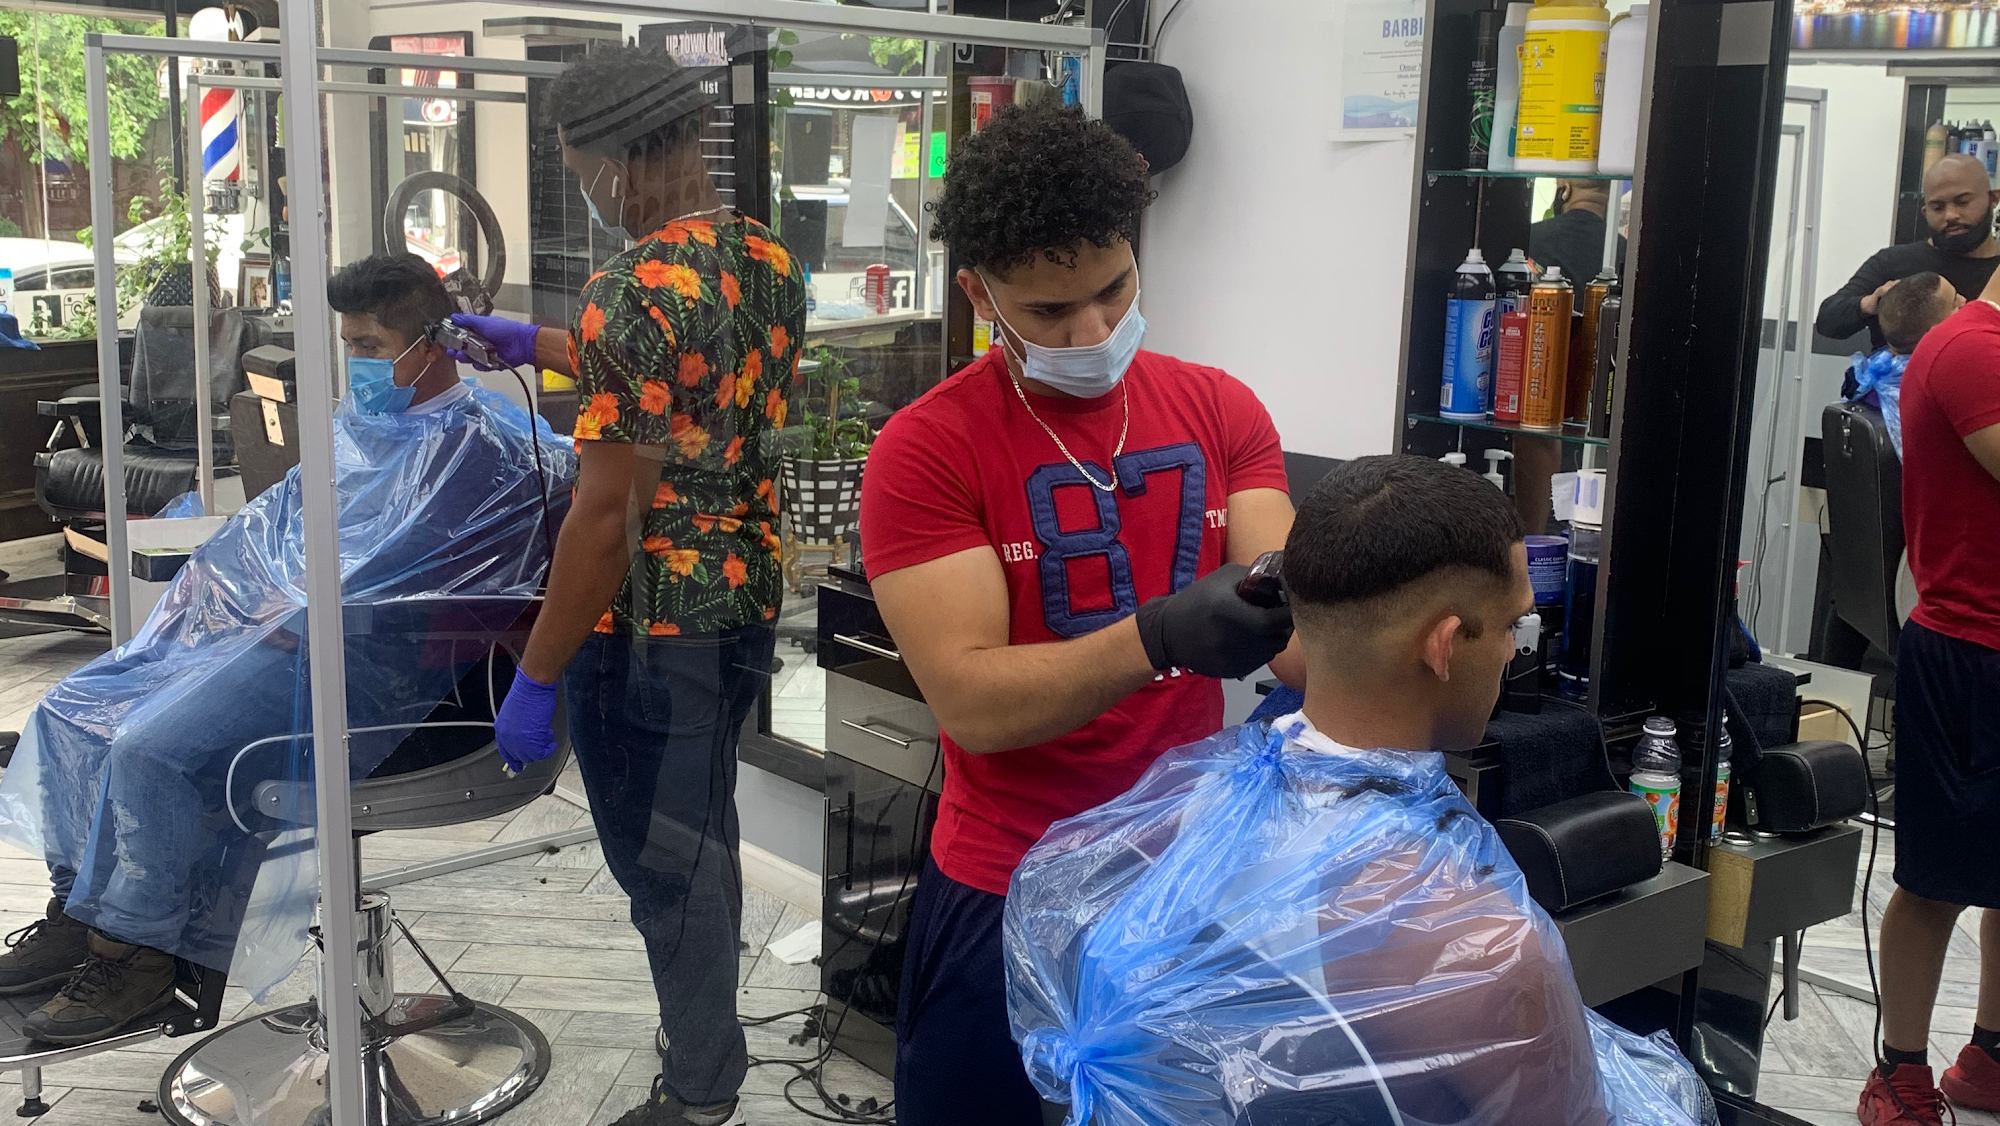 Uptown Cut Barber Shop